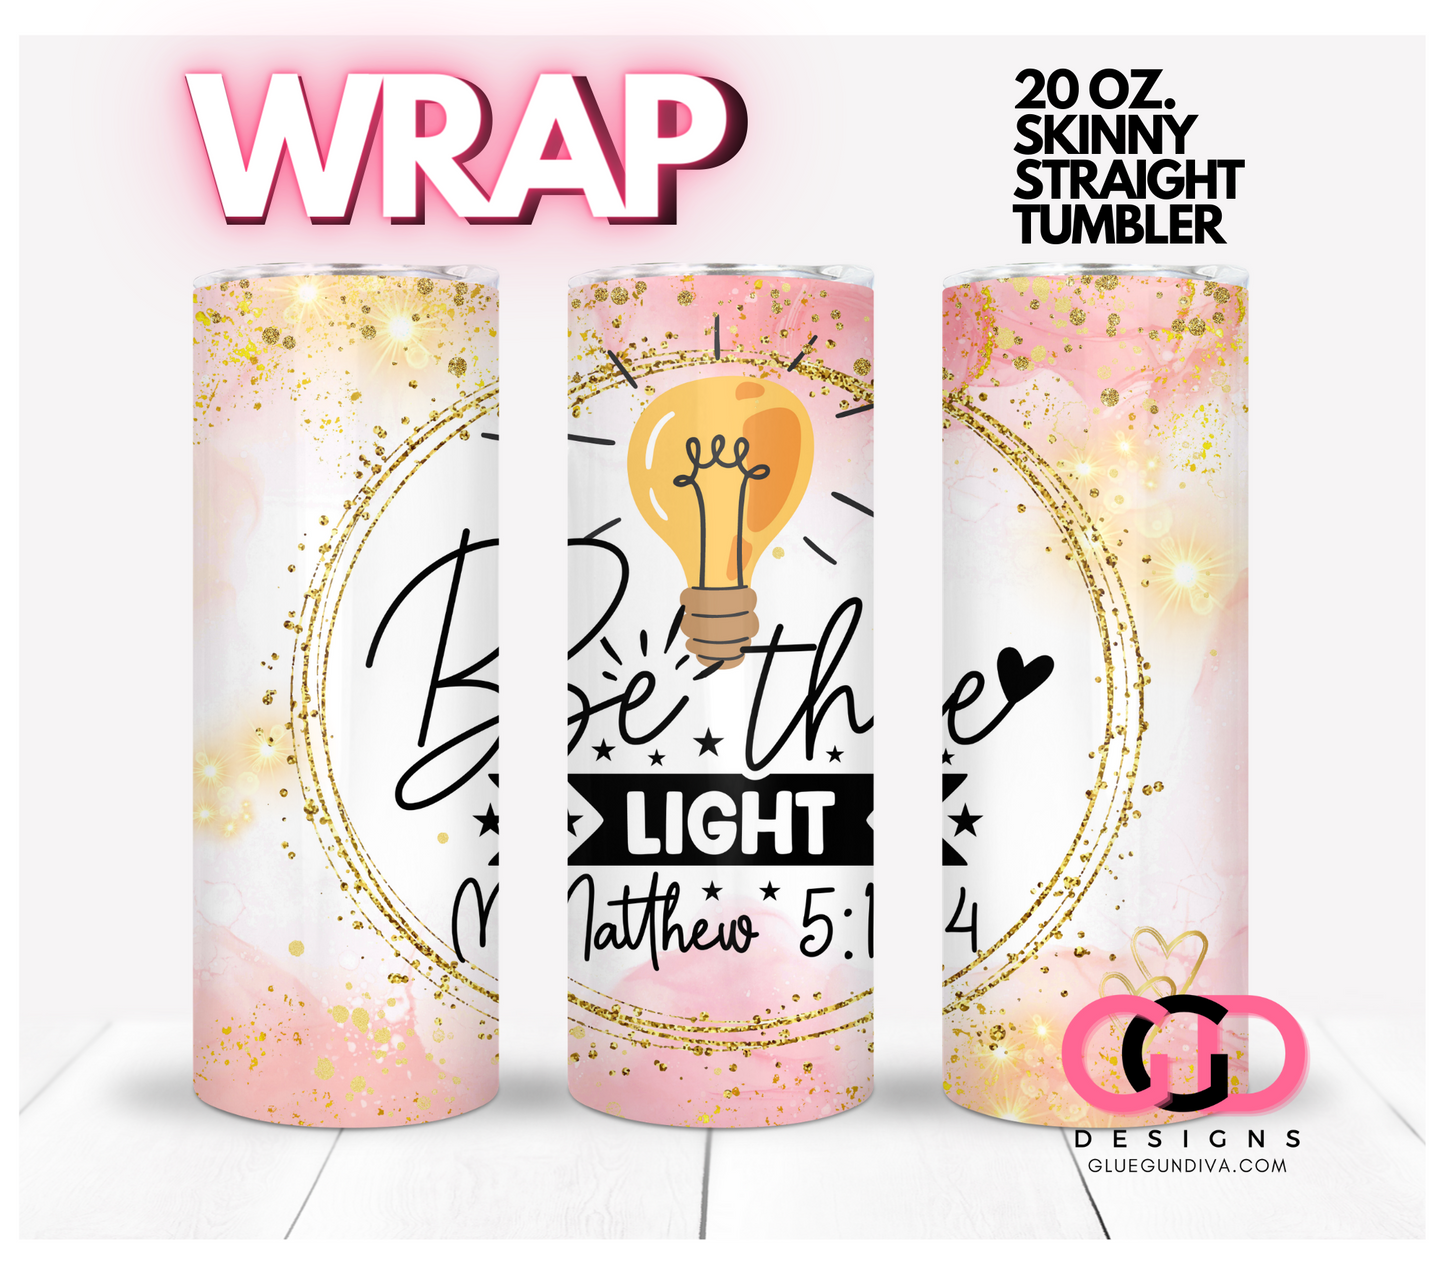 Be the Light -   Digital tumbler wrap for 20 oz skinny straight tumbler